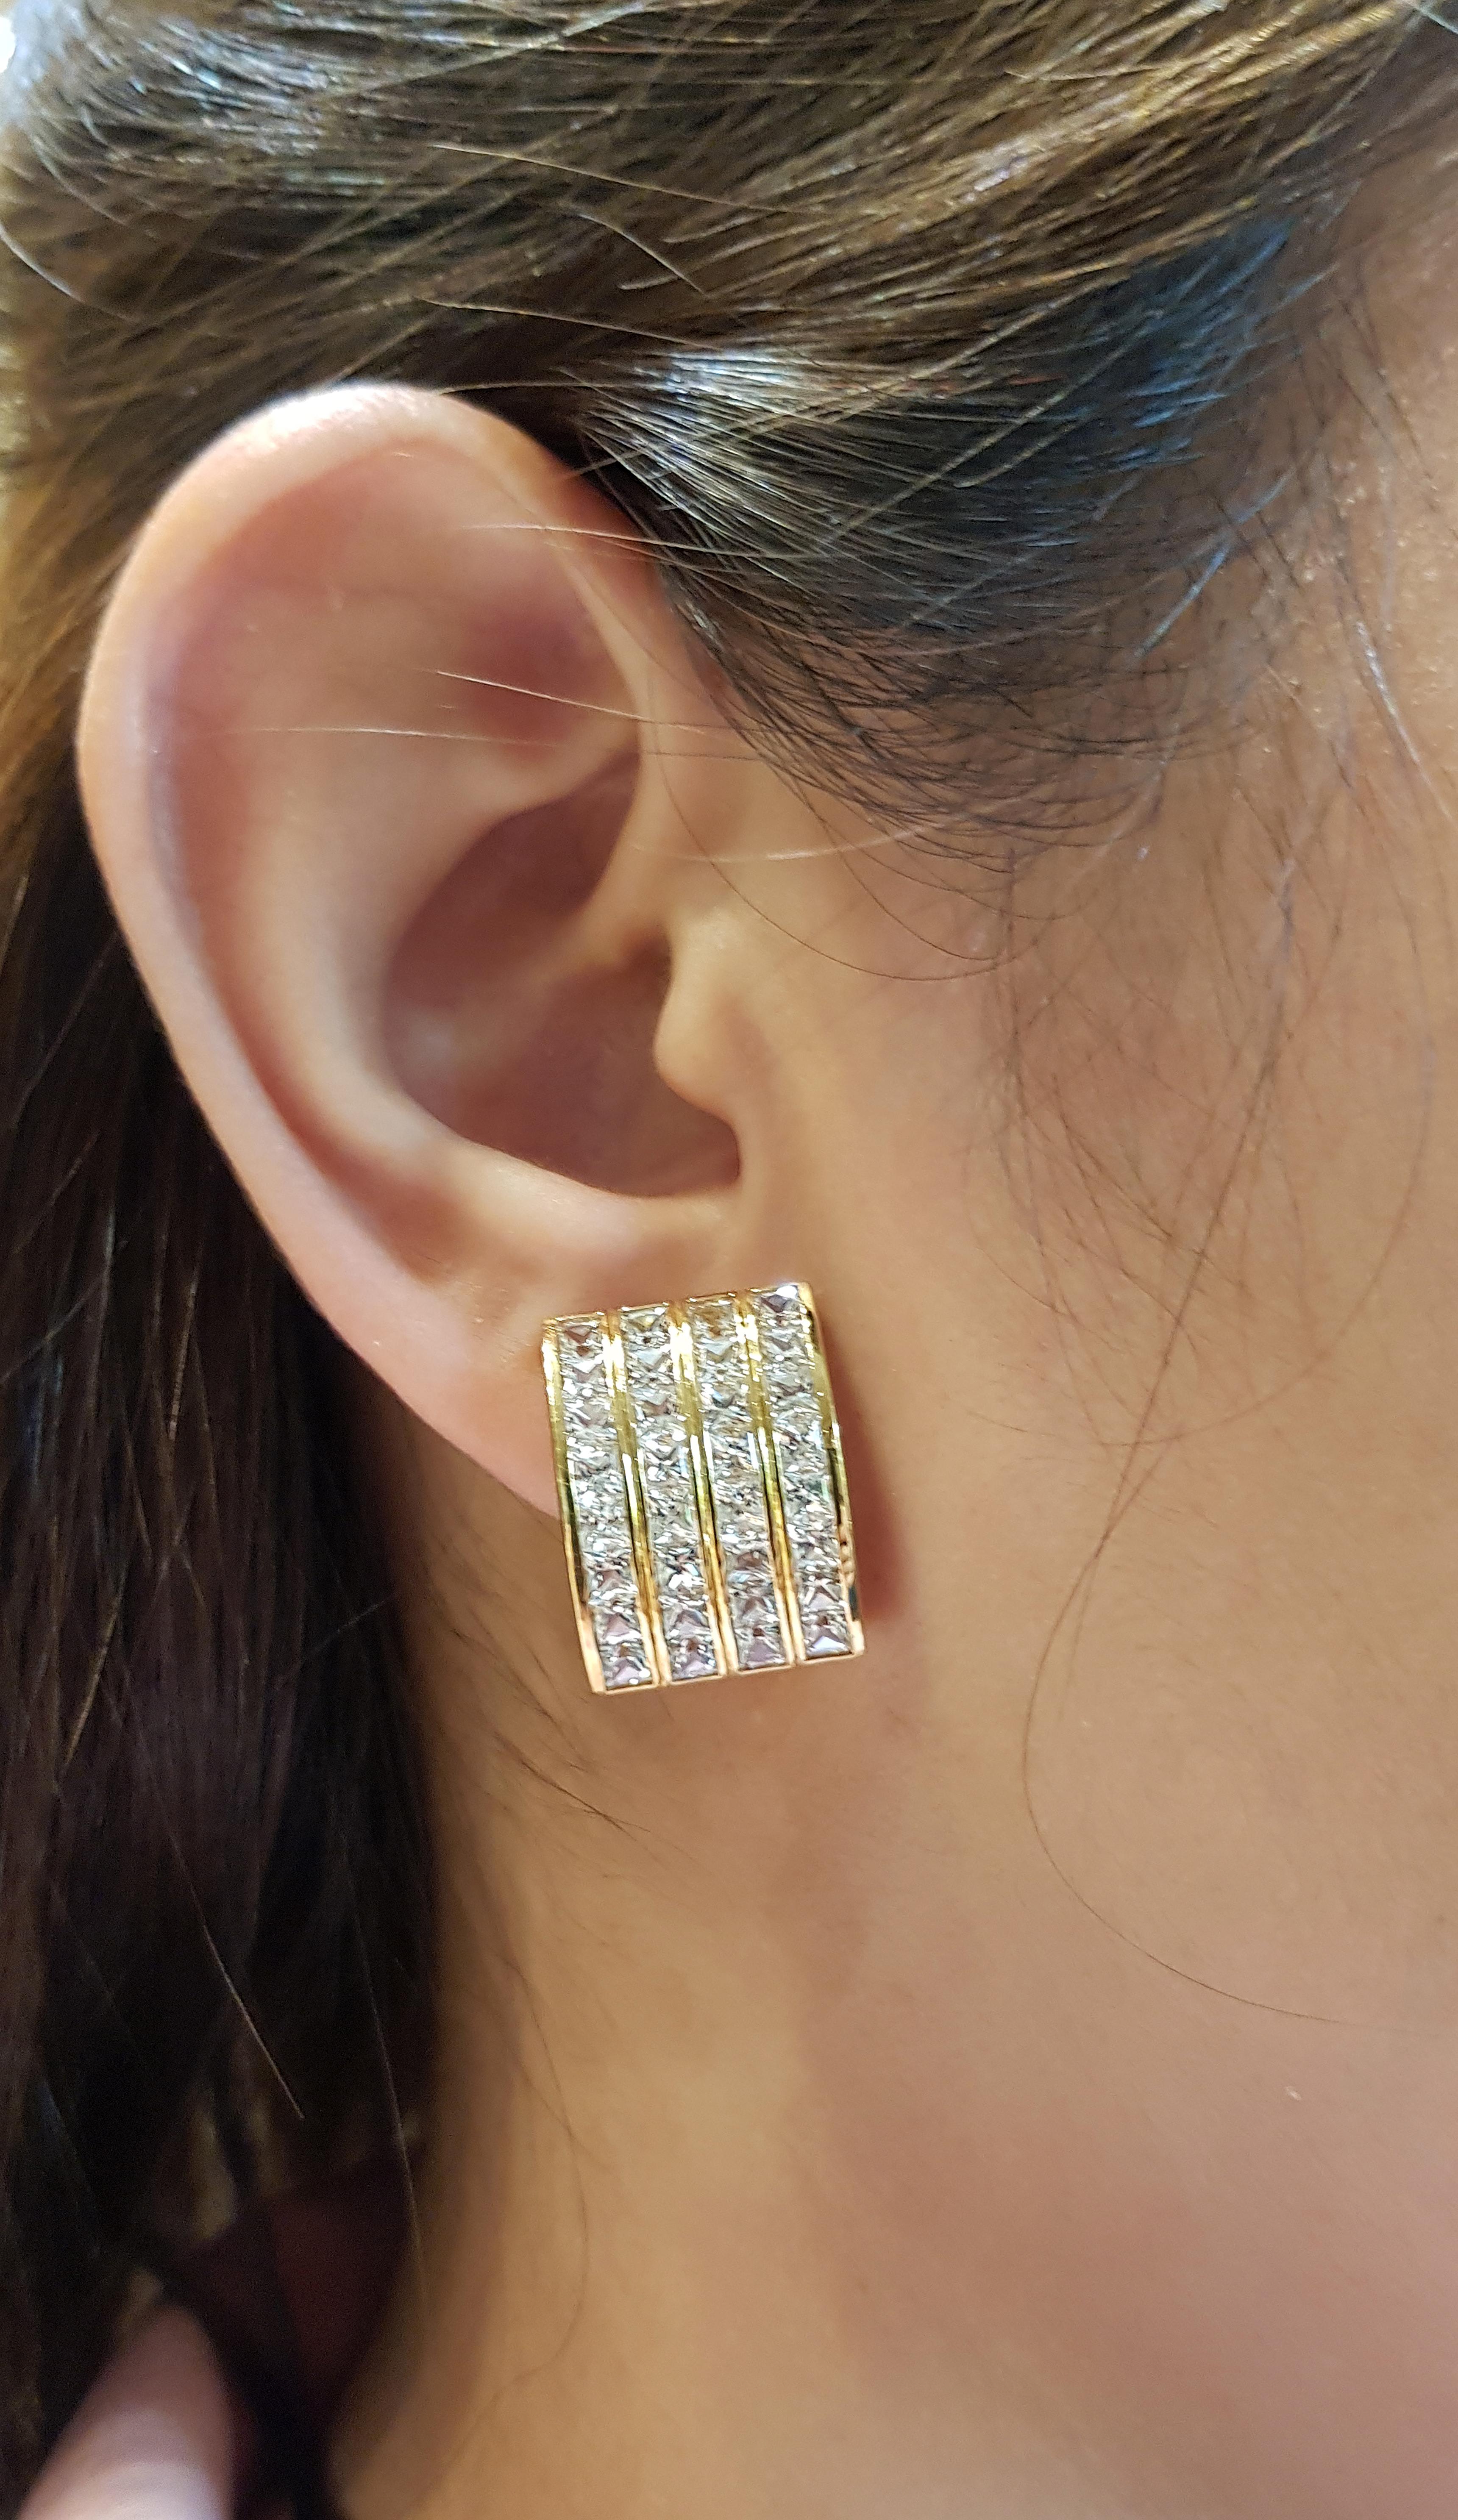 White Sapphire 7.58 carats Earrings set in 18 Karat Gold Settings

Width:  1.4 cm 
Length: 2.0 cm
Total Weight: 13.41 grams

